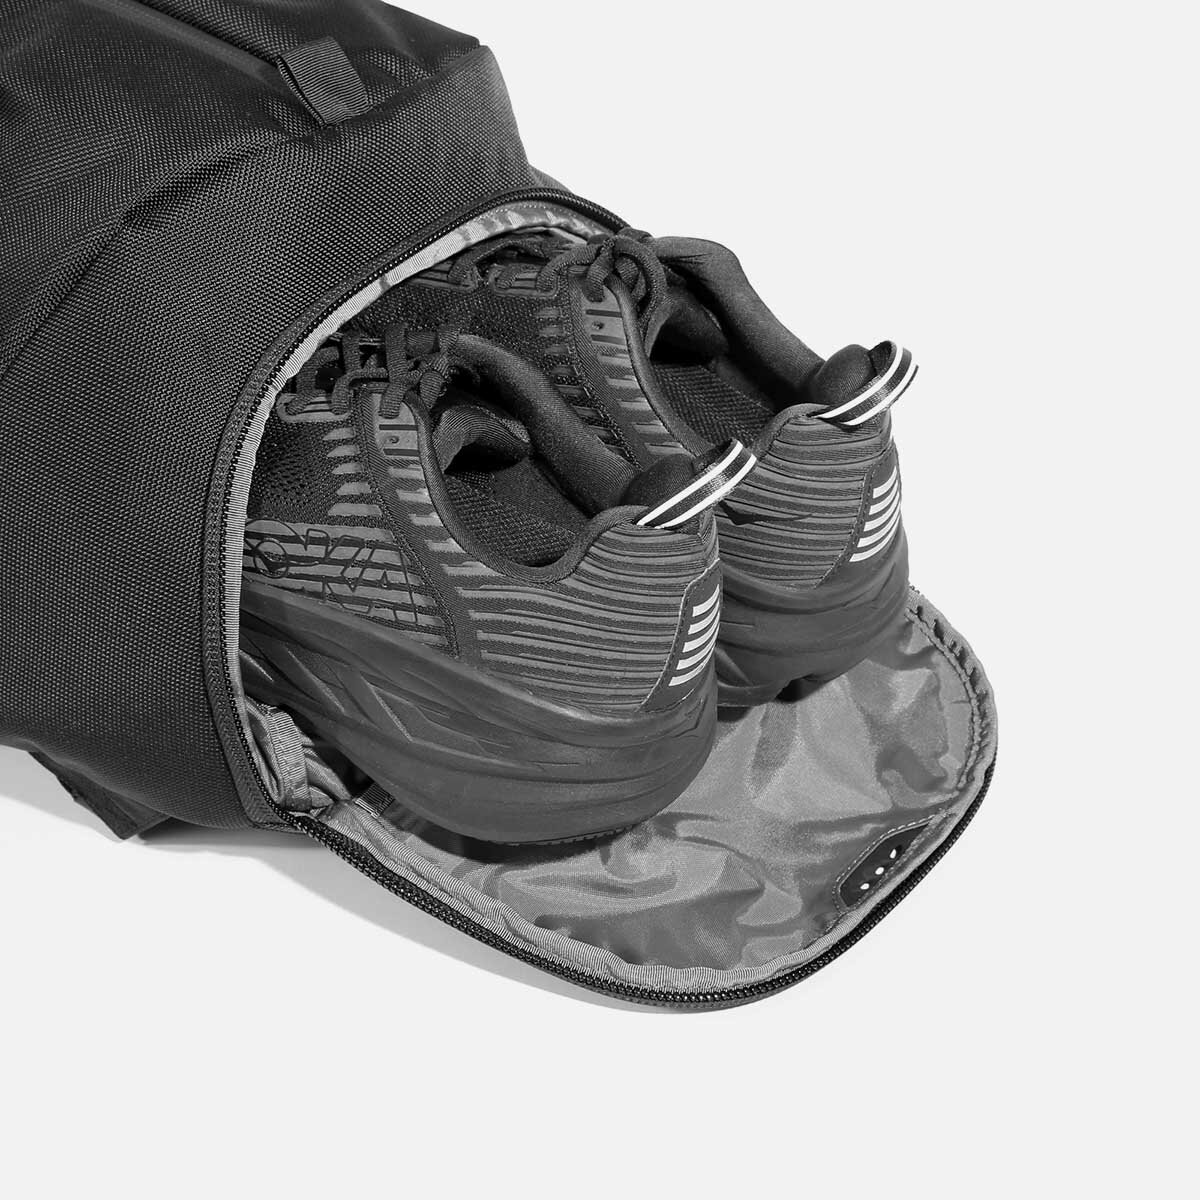 Duffel Pack 3 - Black — Aer | Modern gym bags, travel backpacks 